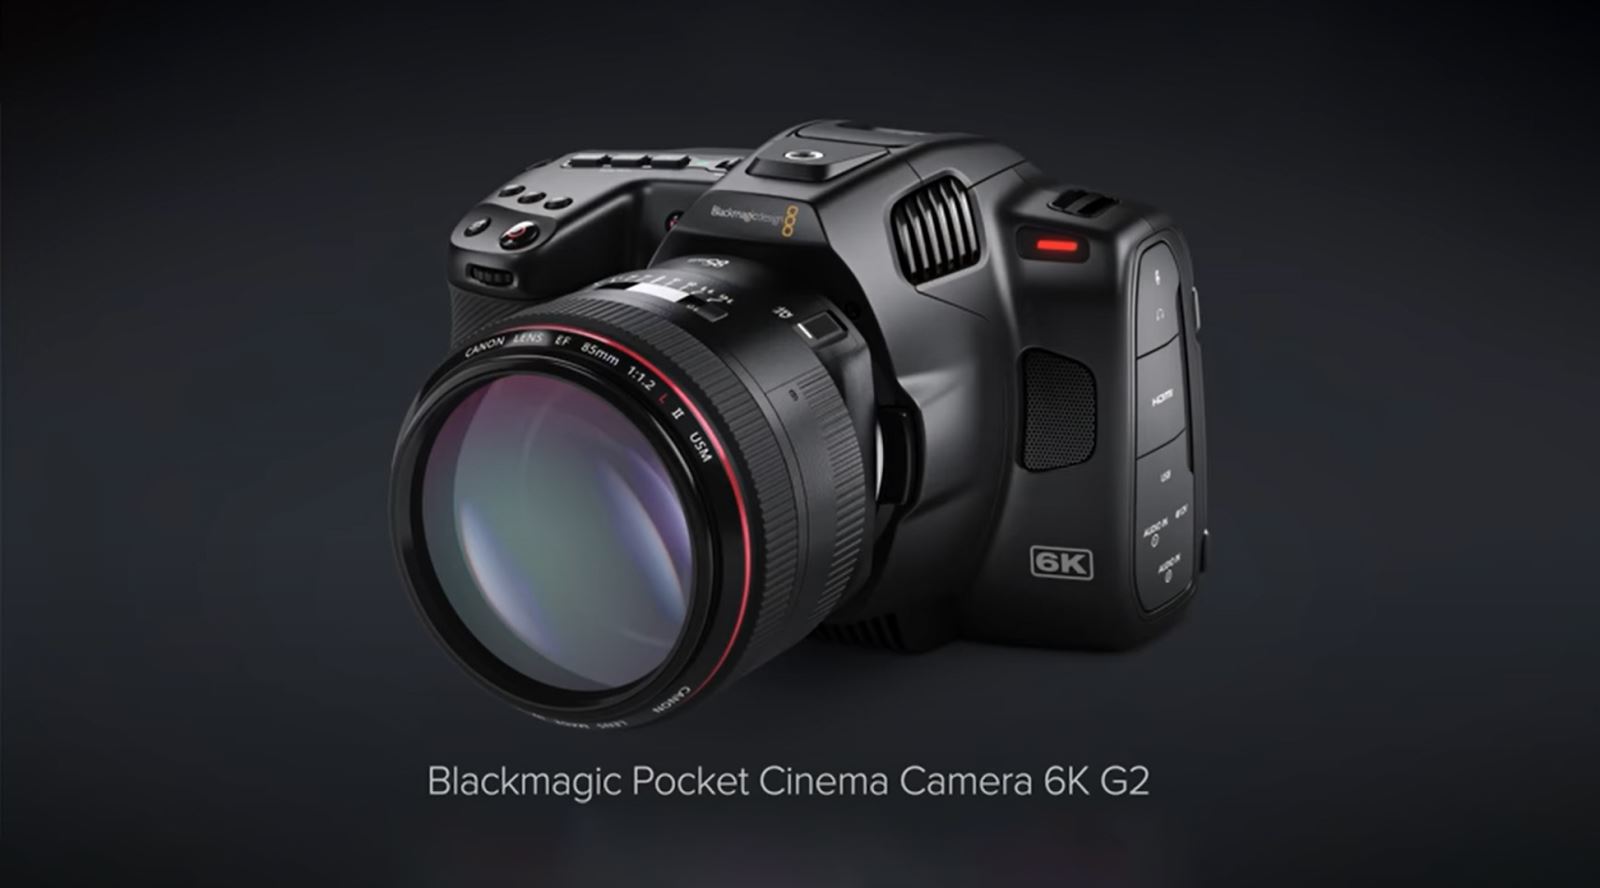 CVP Introduces the Blackmagic Pocket Cinema Camera 6K G2